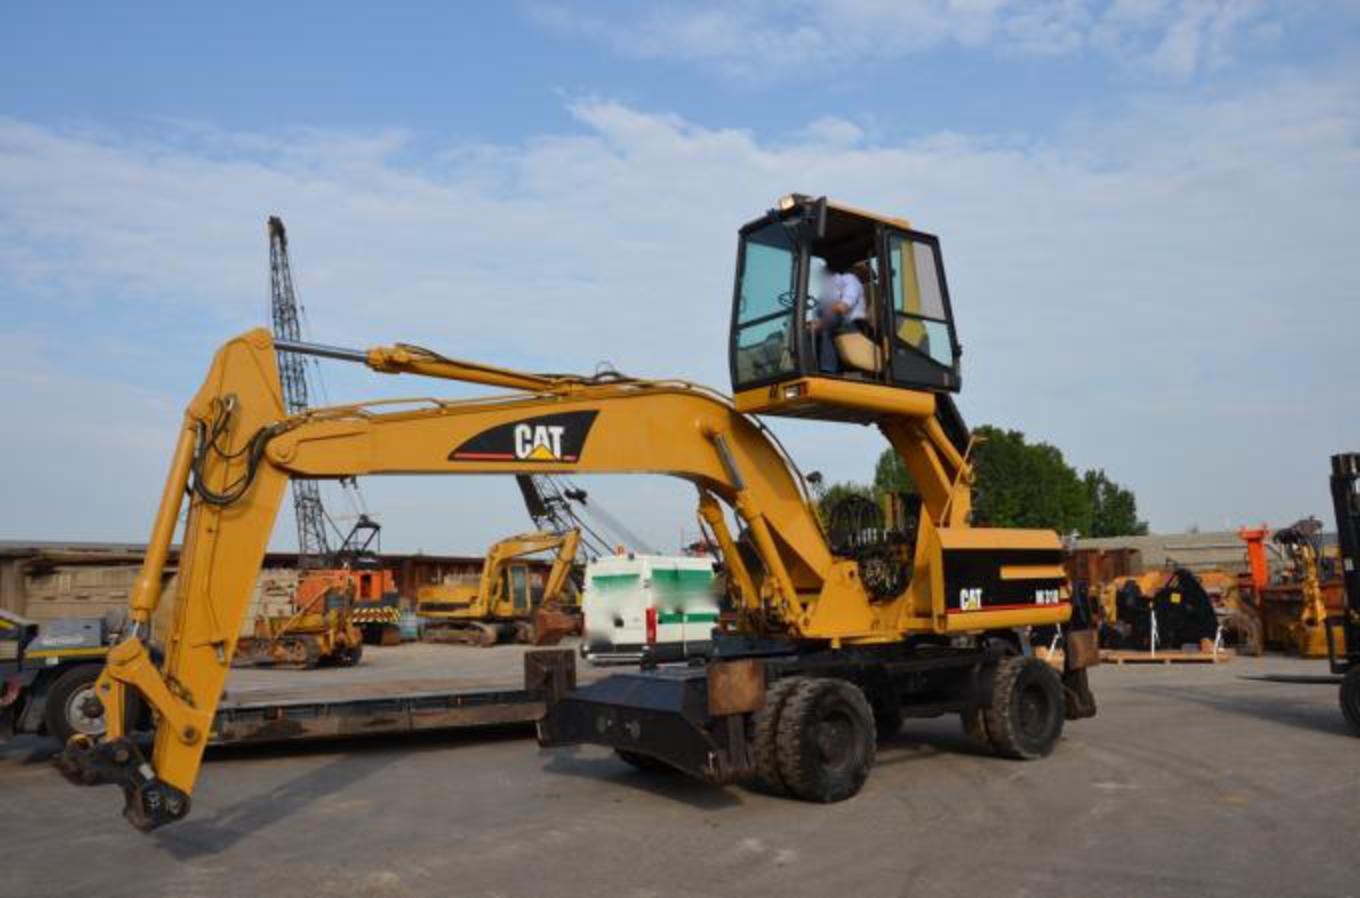 CATERPILLAR-M318 - Excavator Wheel - Yellowdozer Sales